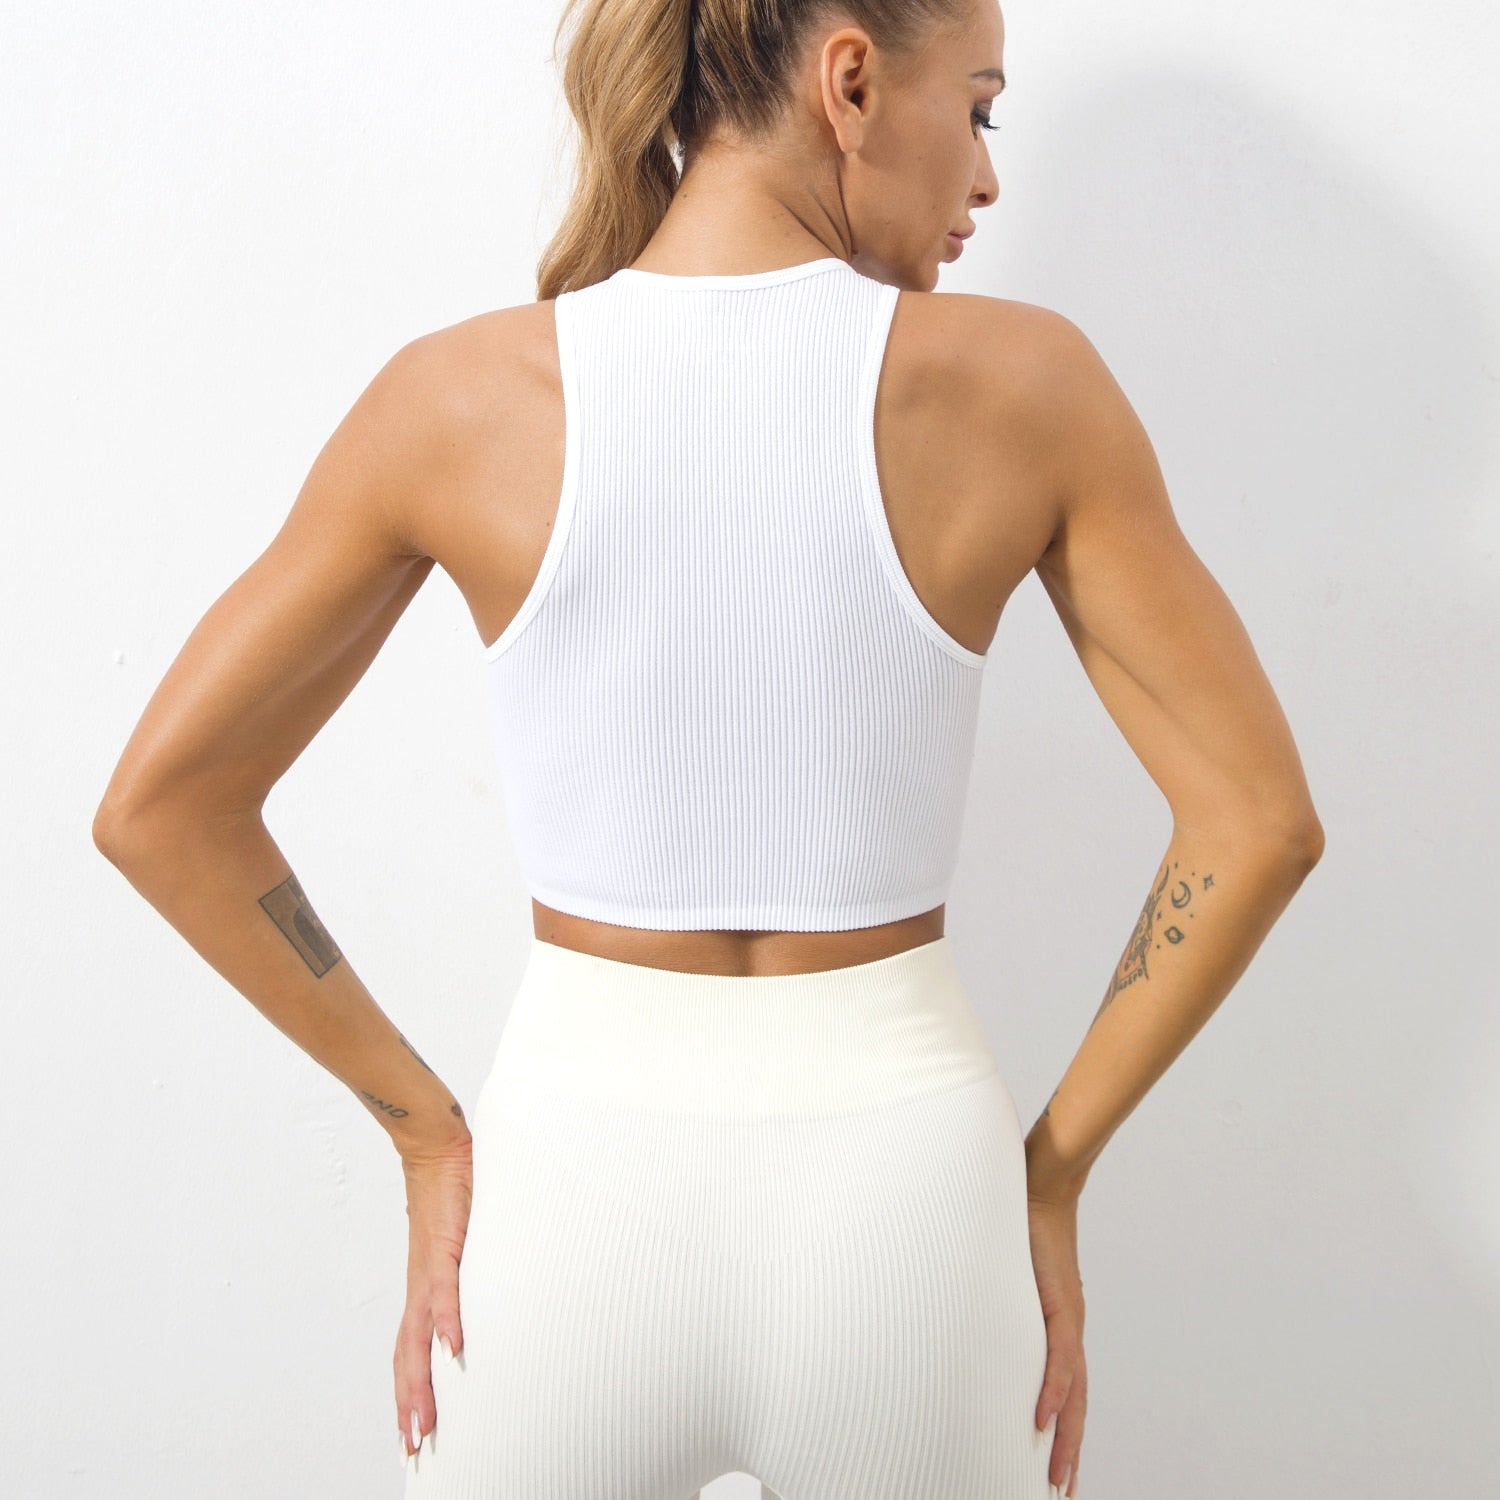 SALSPOR Sleeveless Yoga Short Shirts Running Sports Gym Women Tops Fitness Running Moisture Breathable Seamless Knitted Vest